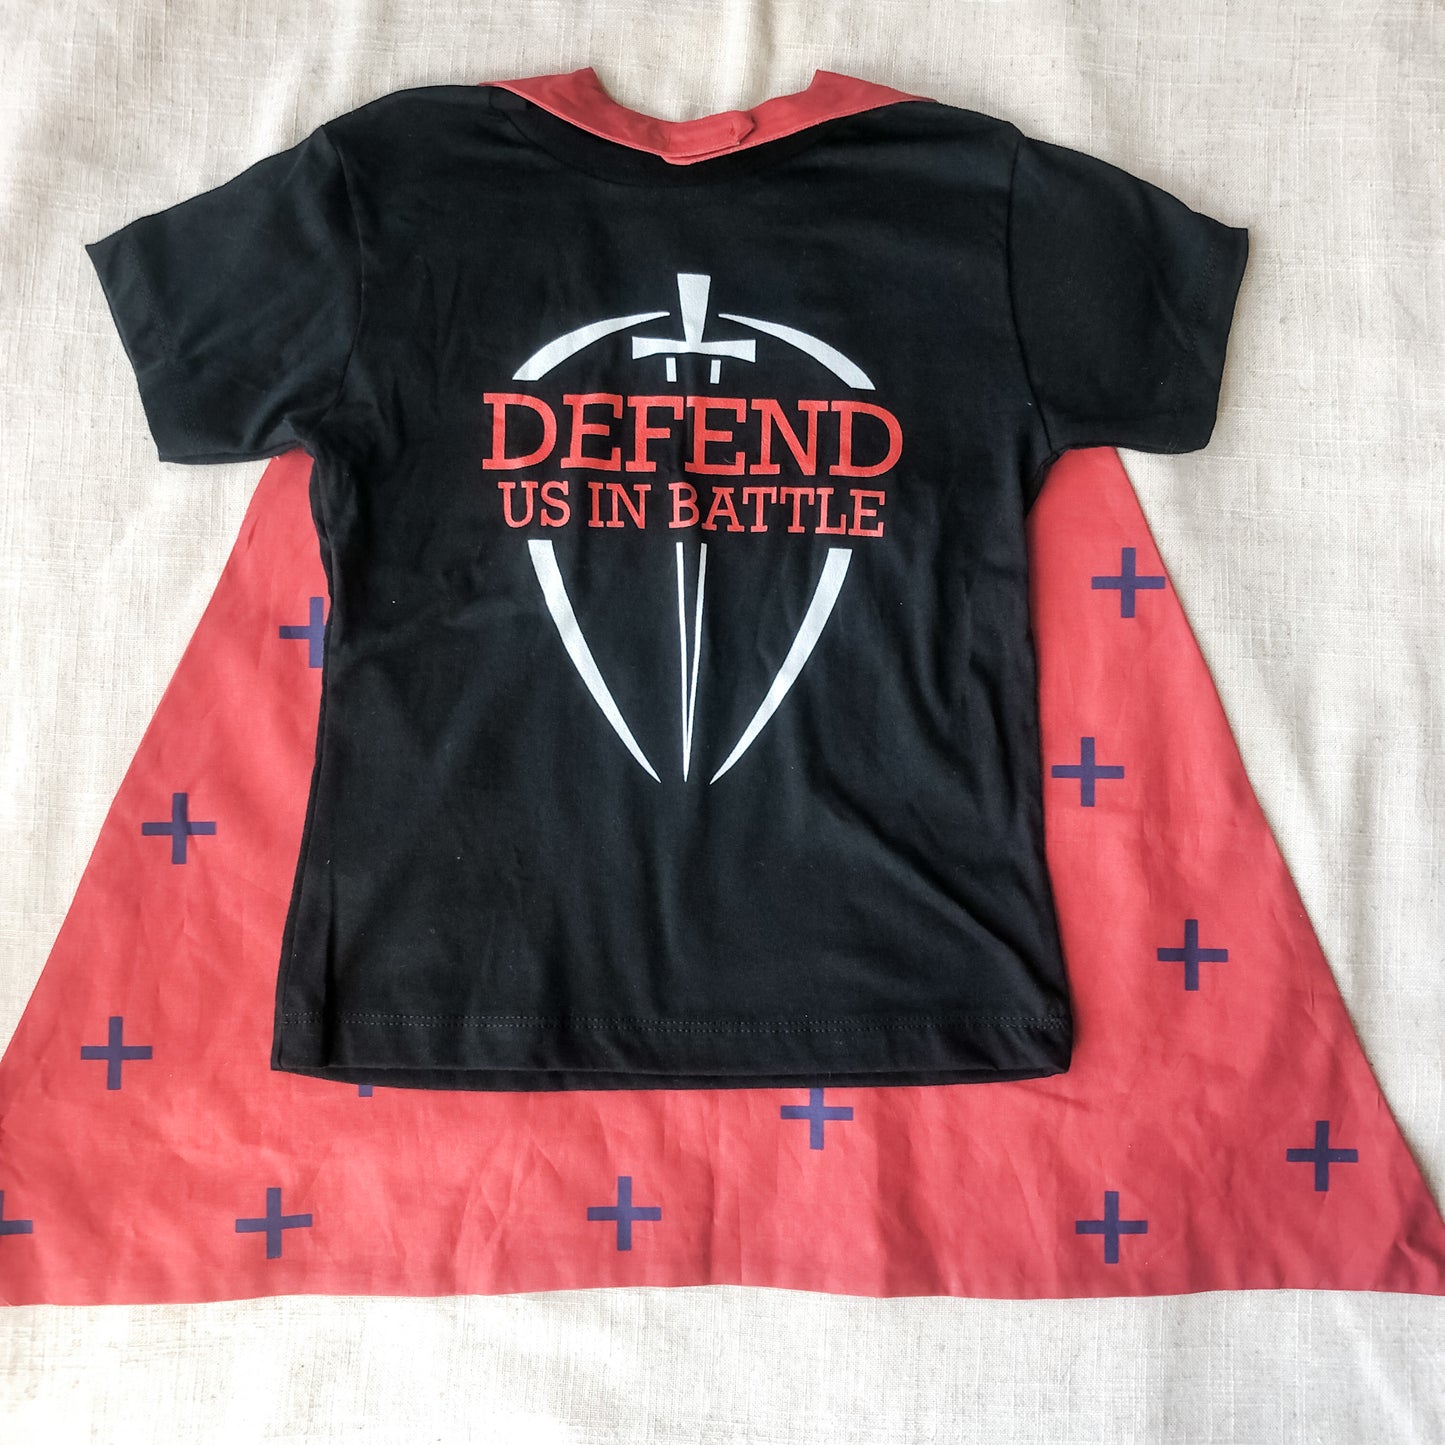 St Michael Defend us in Battle T-Shirt